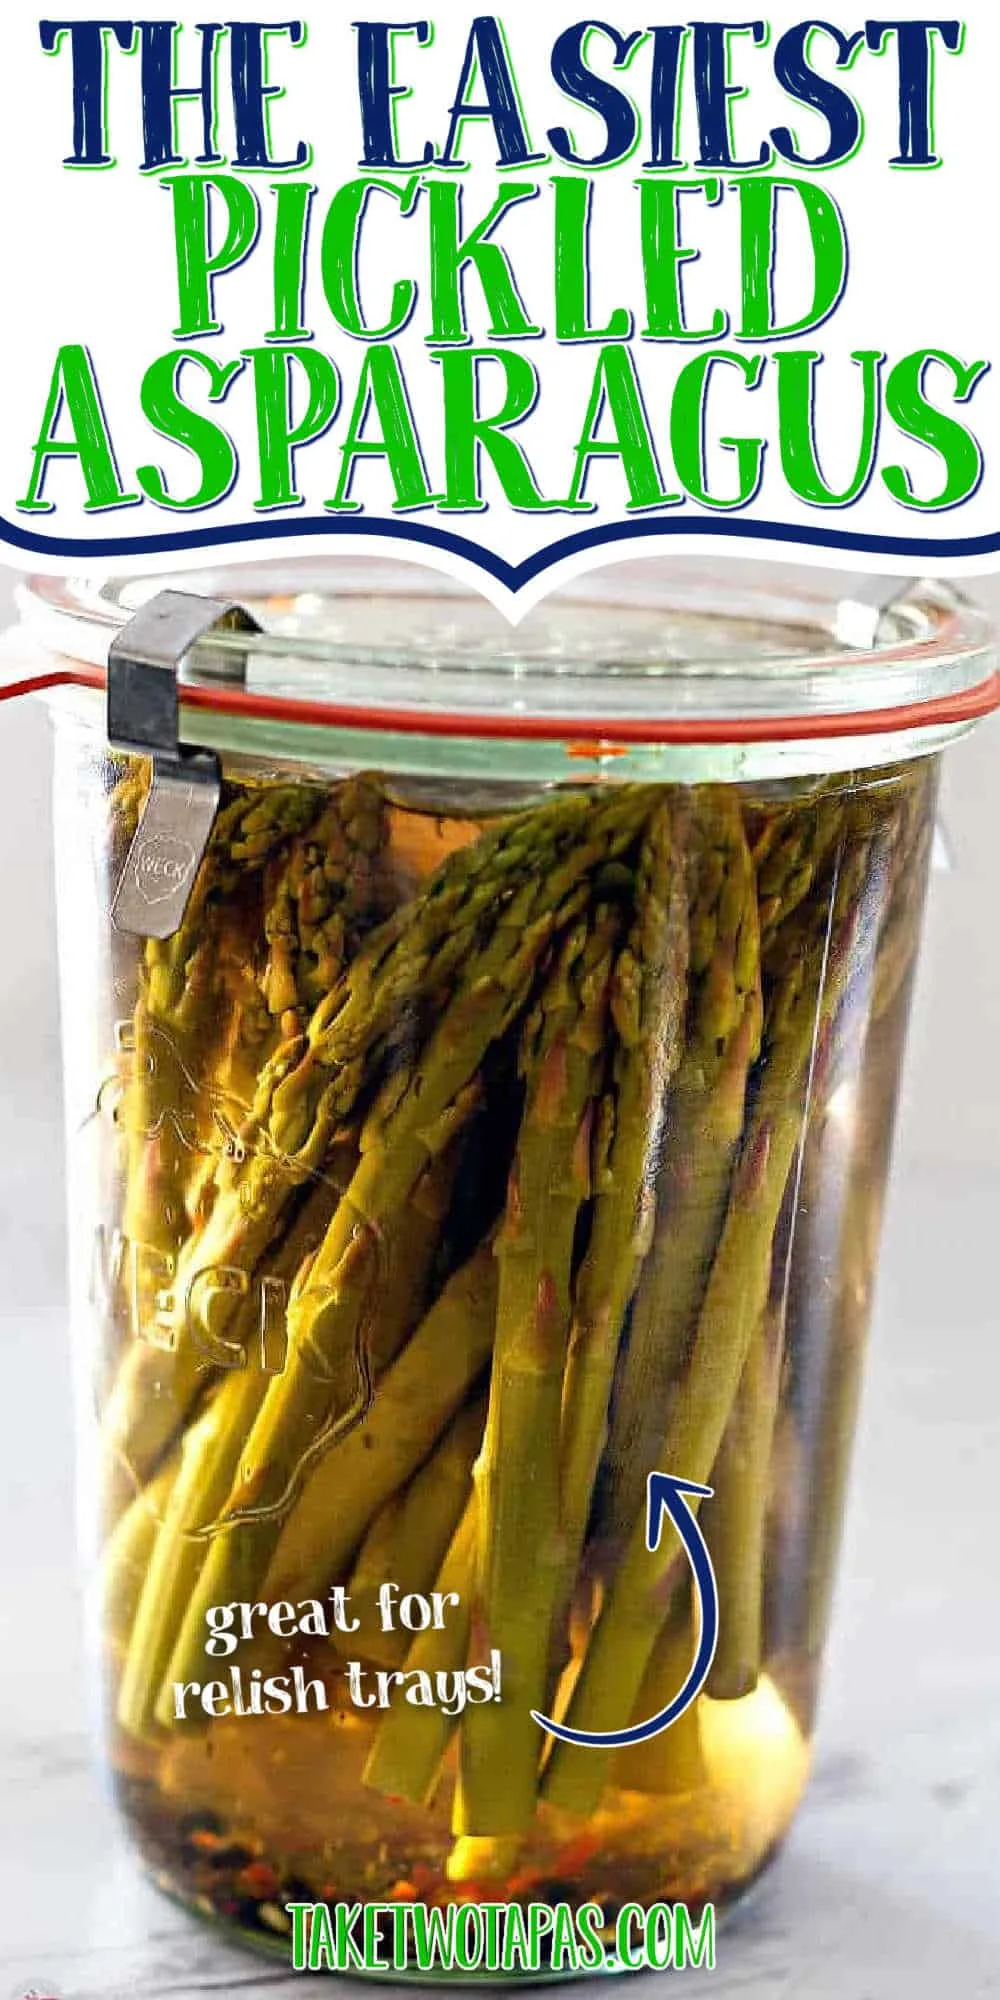 jar of asparagus with text "the easiest pickled asparagus"